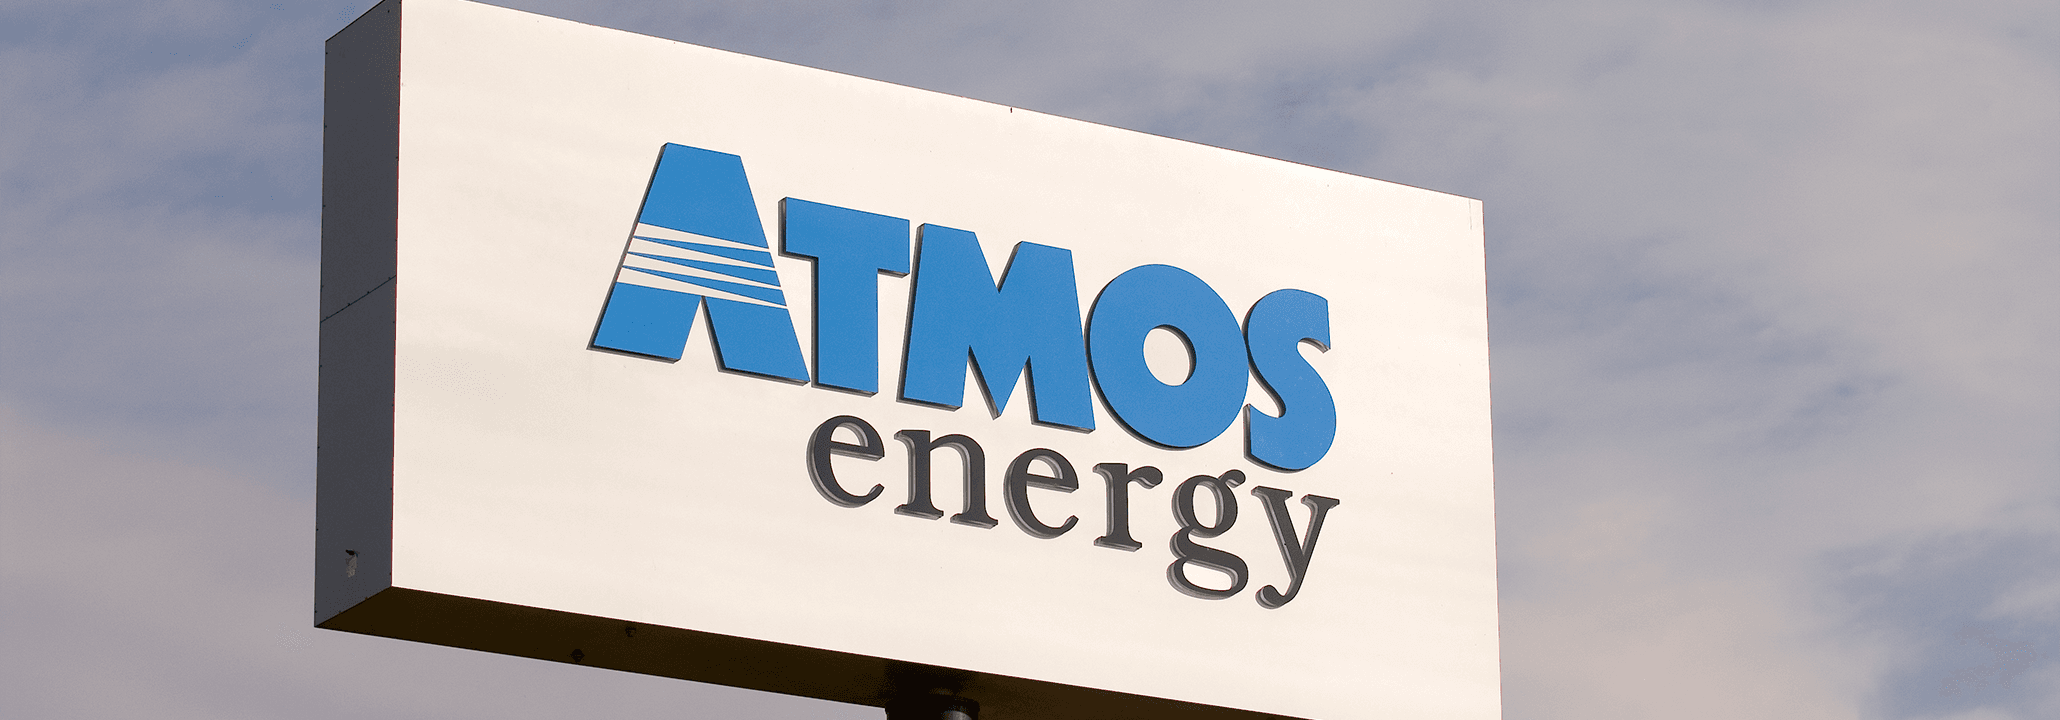 Atmos Energy sign